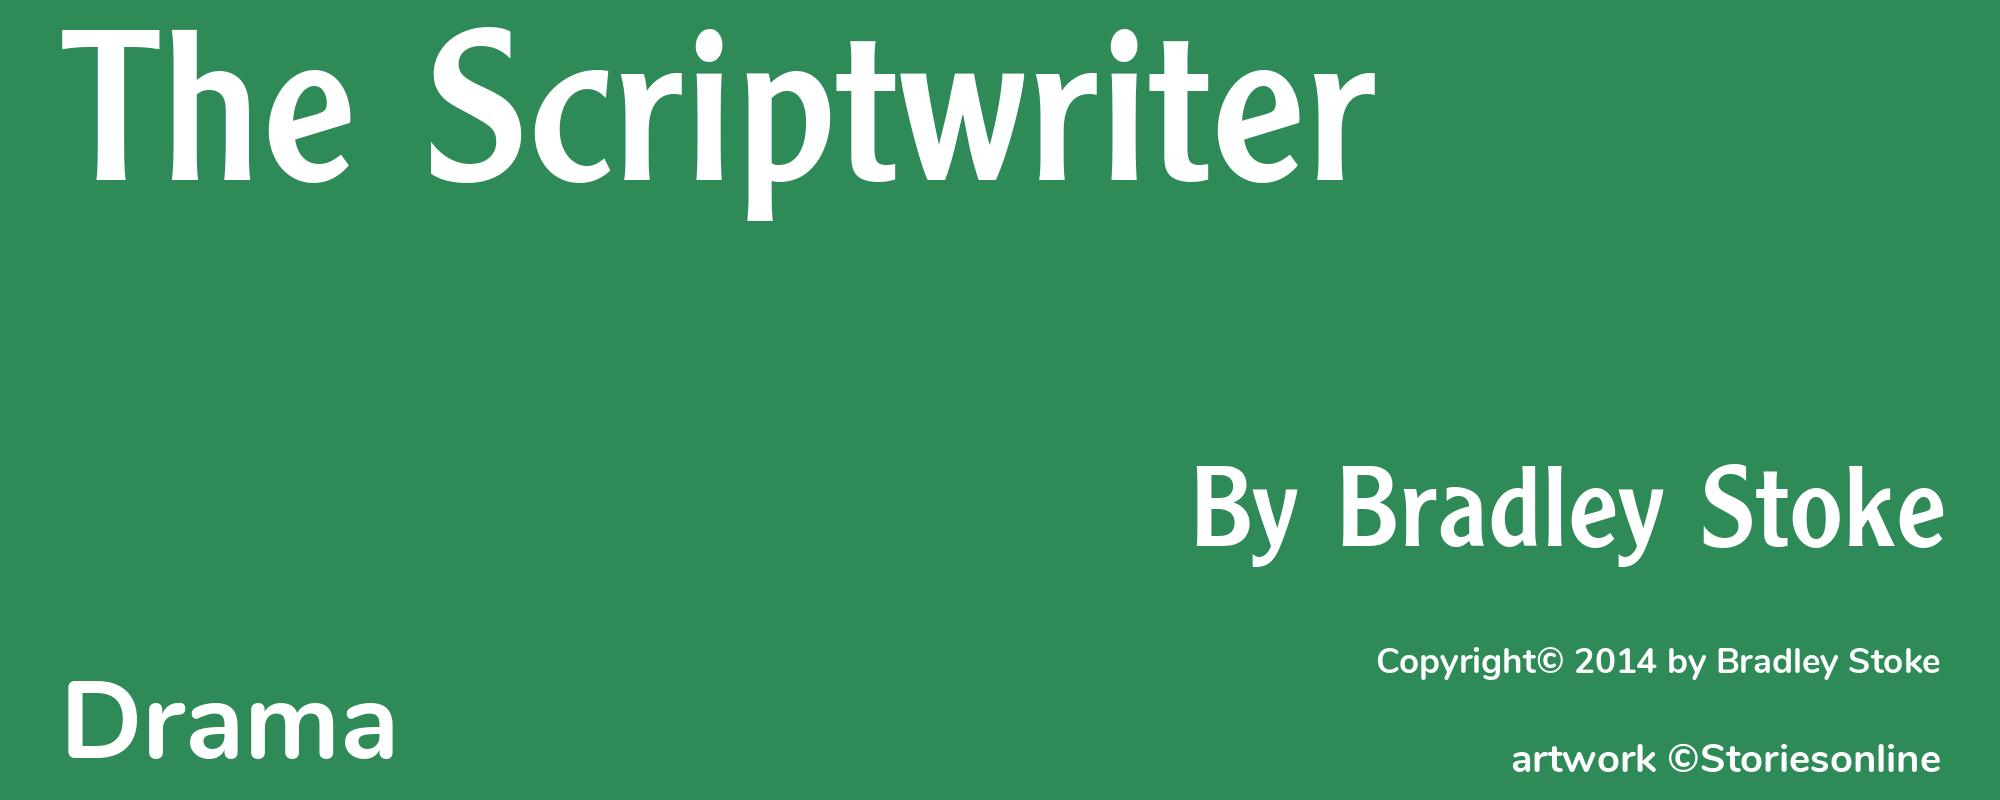 The Scriptwriter - Cover